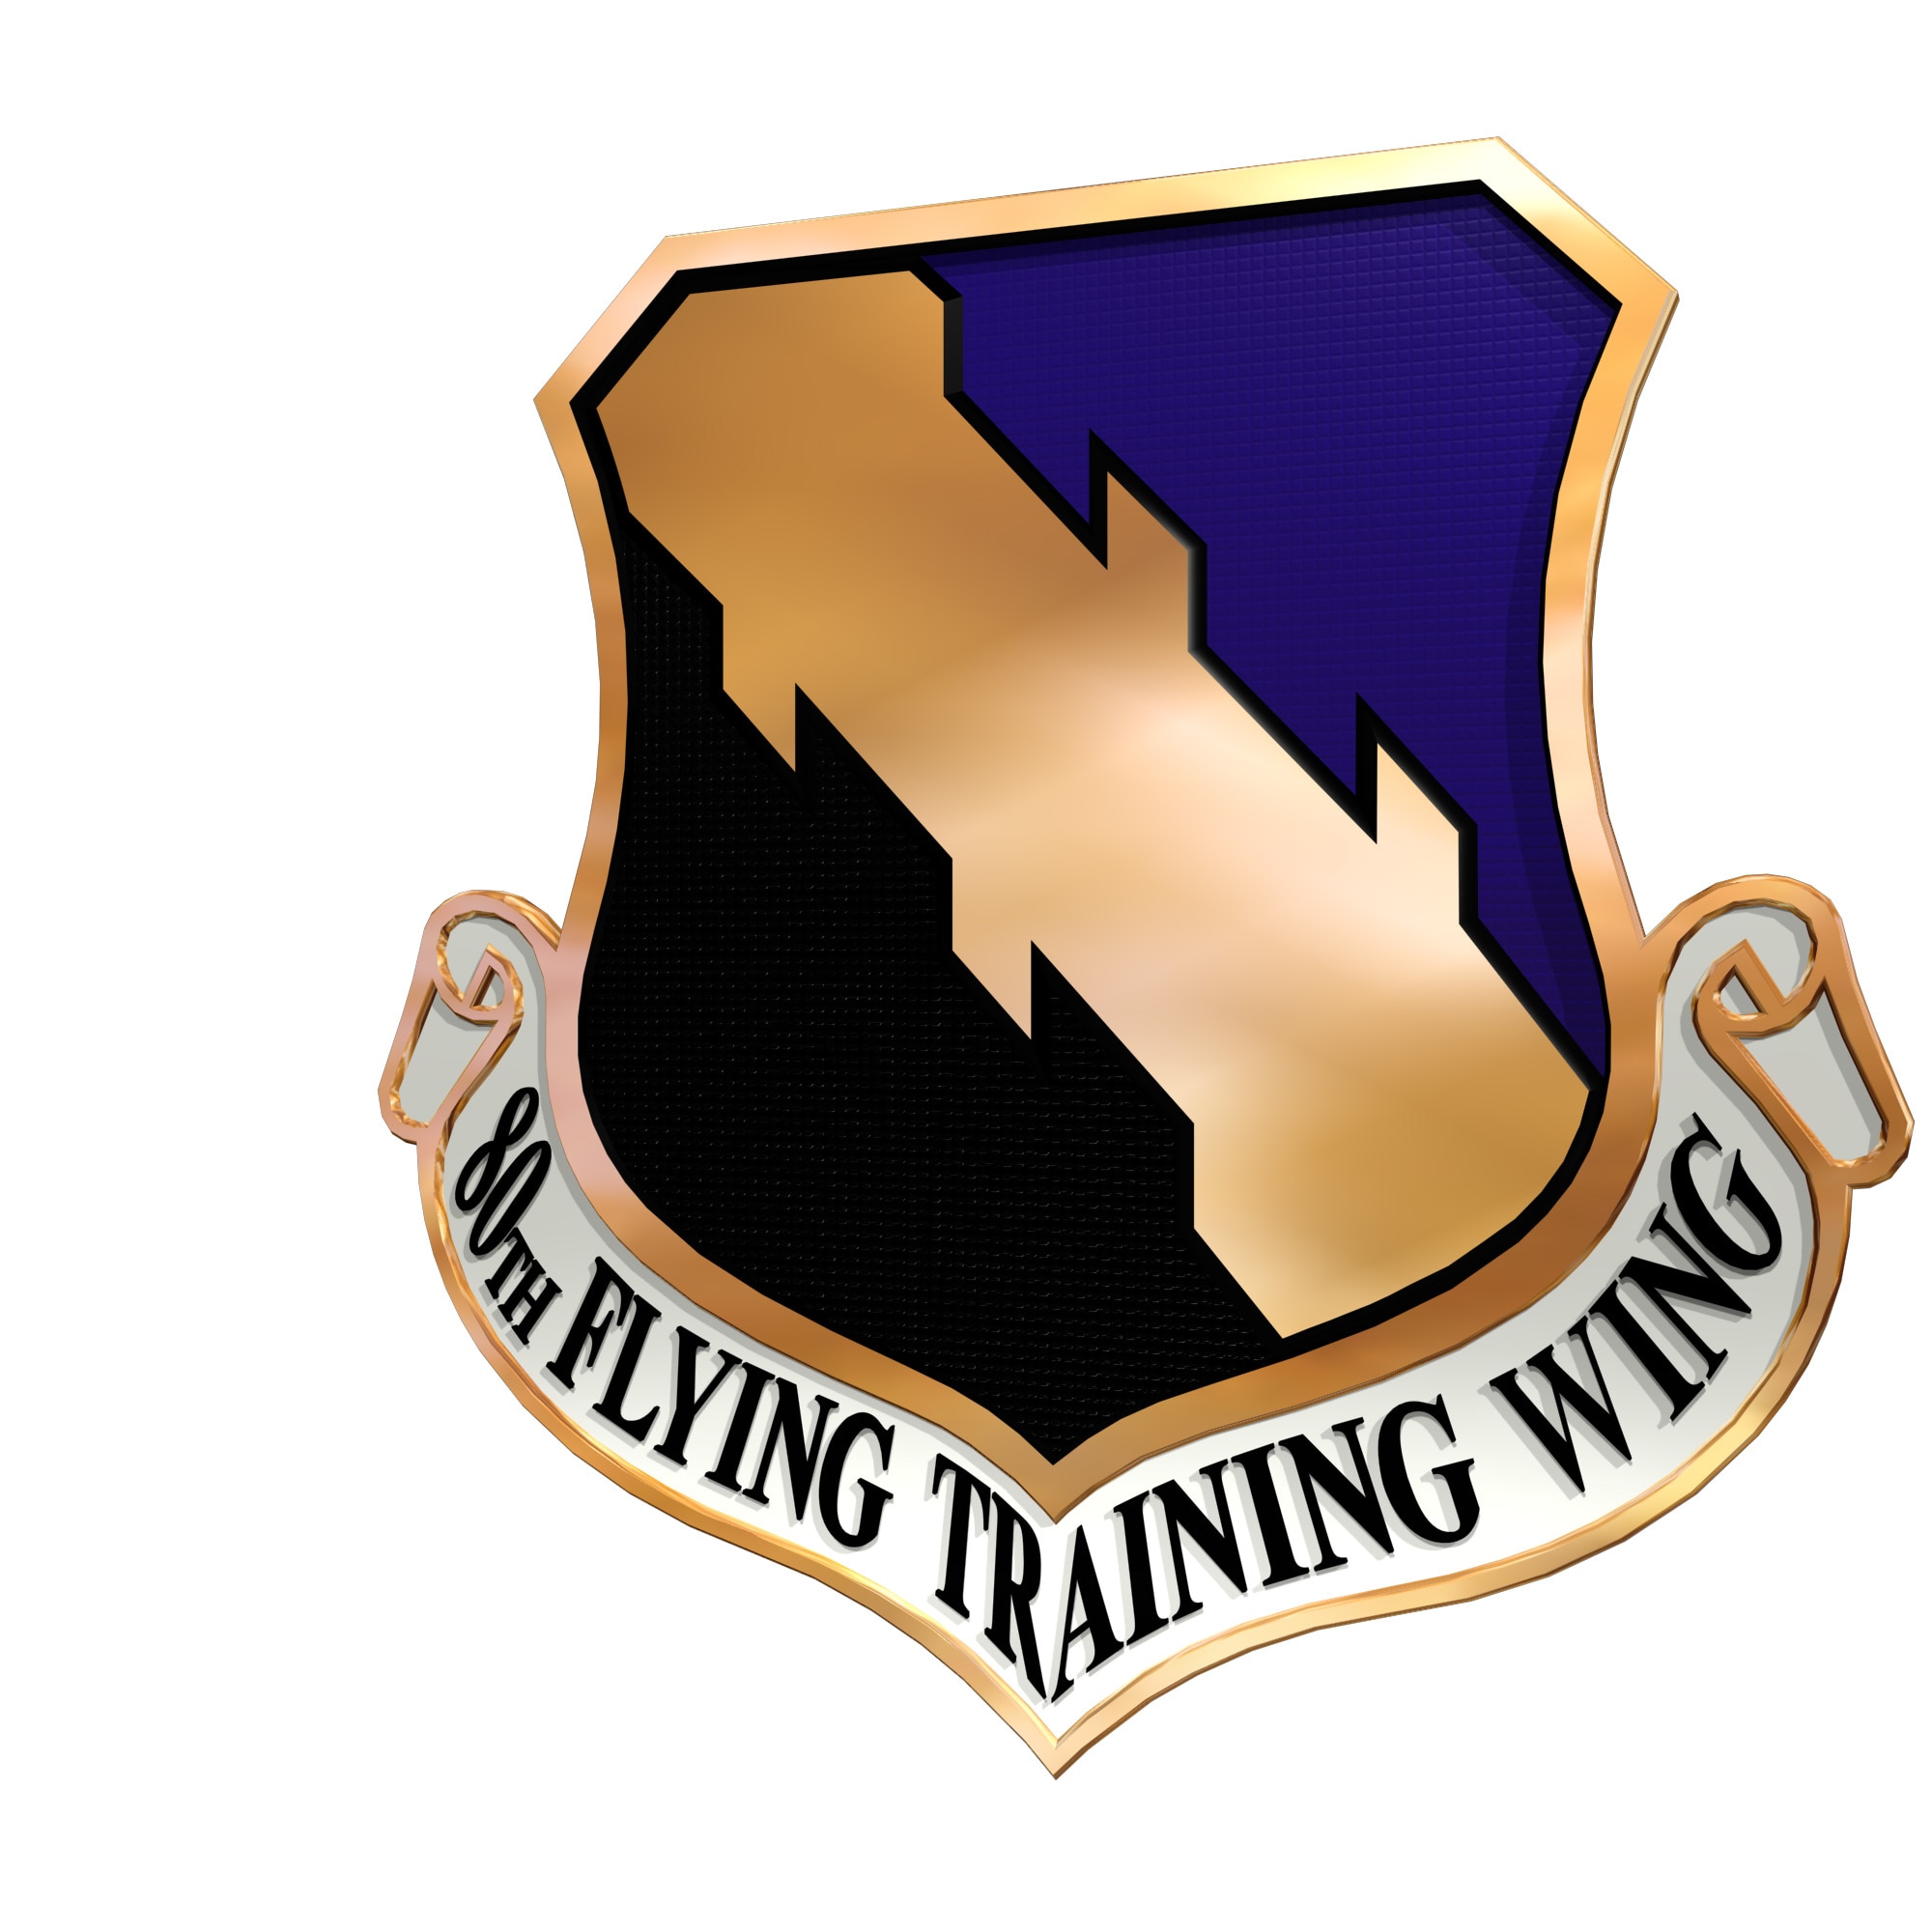 80th Flying Training Wing shield